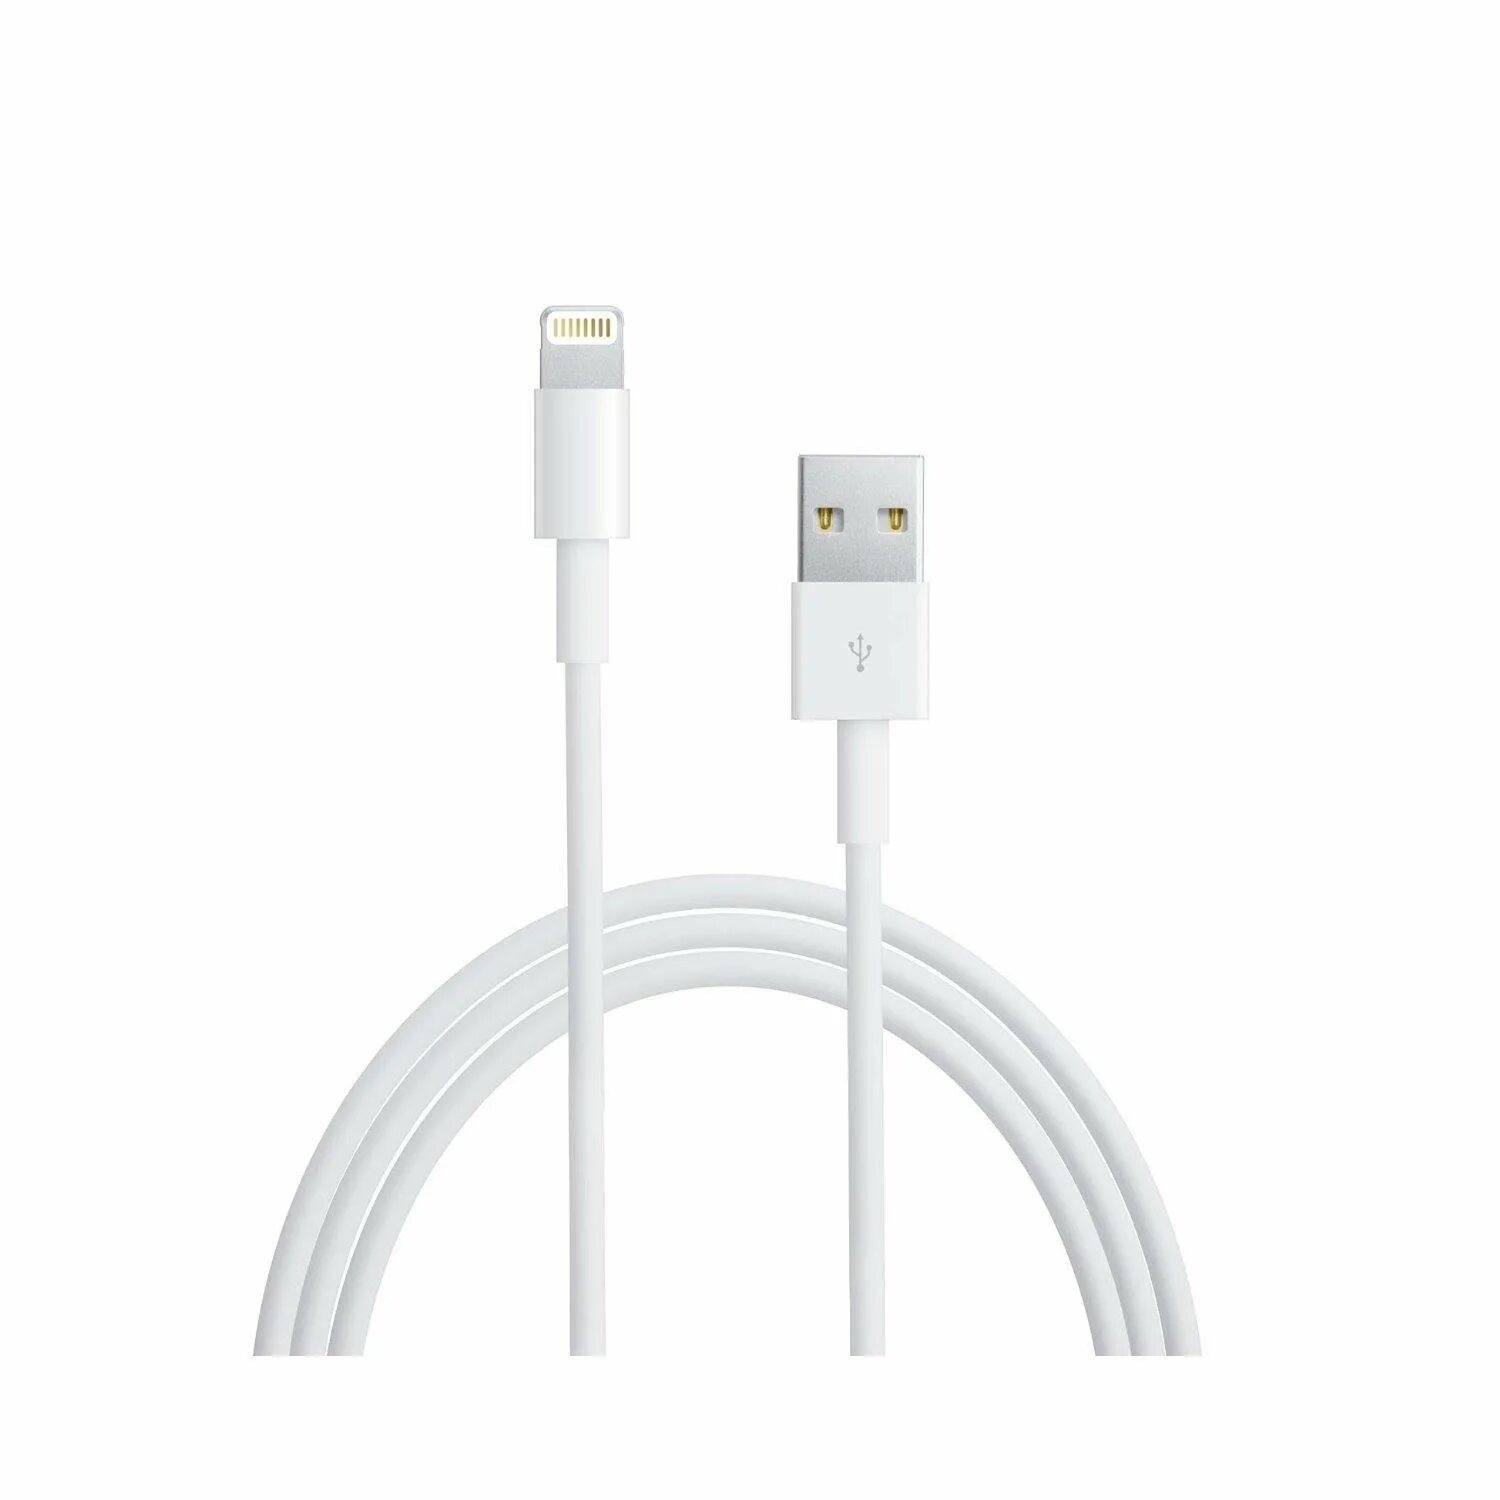 Usb lightning оригинал. Кабель USB - Lightning Apple iphone Original 2.0 м White 627448. Apple Lightning - USB 2.0 Тип а. Apple USB-C charge Cable (2m). Apple кабель USB/Lightning 2 м.